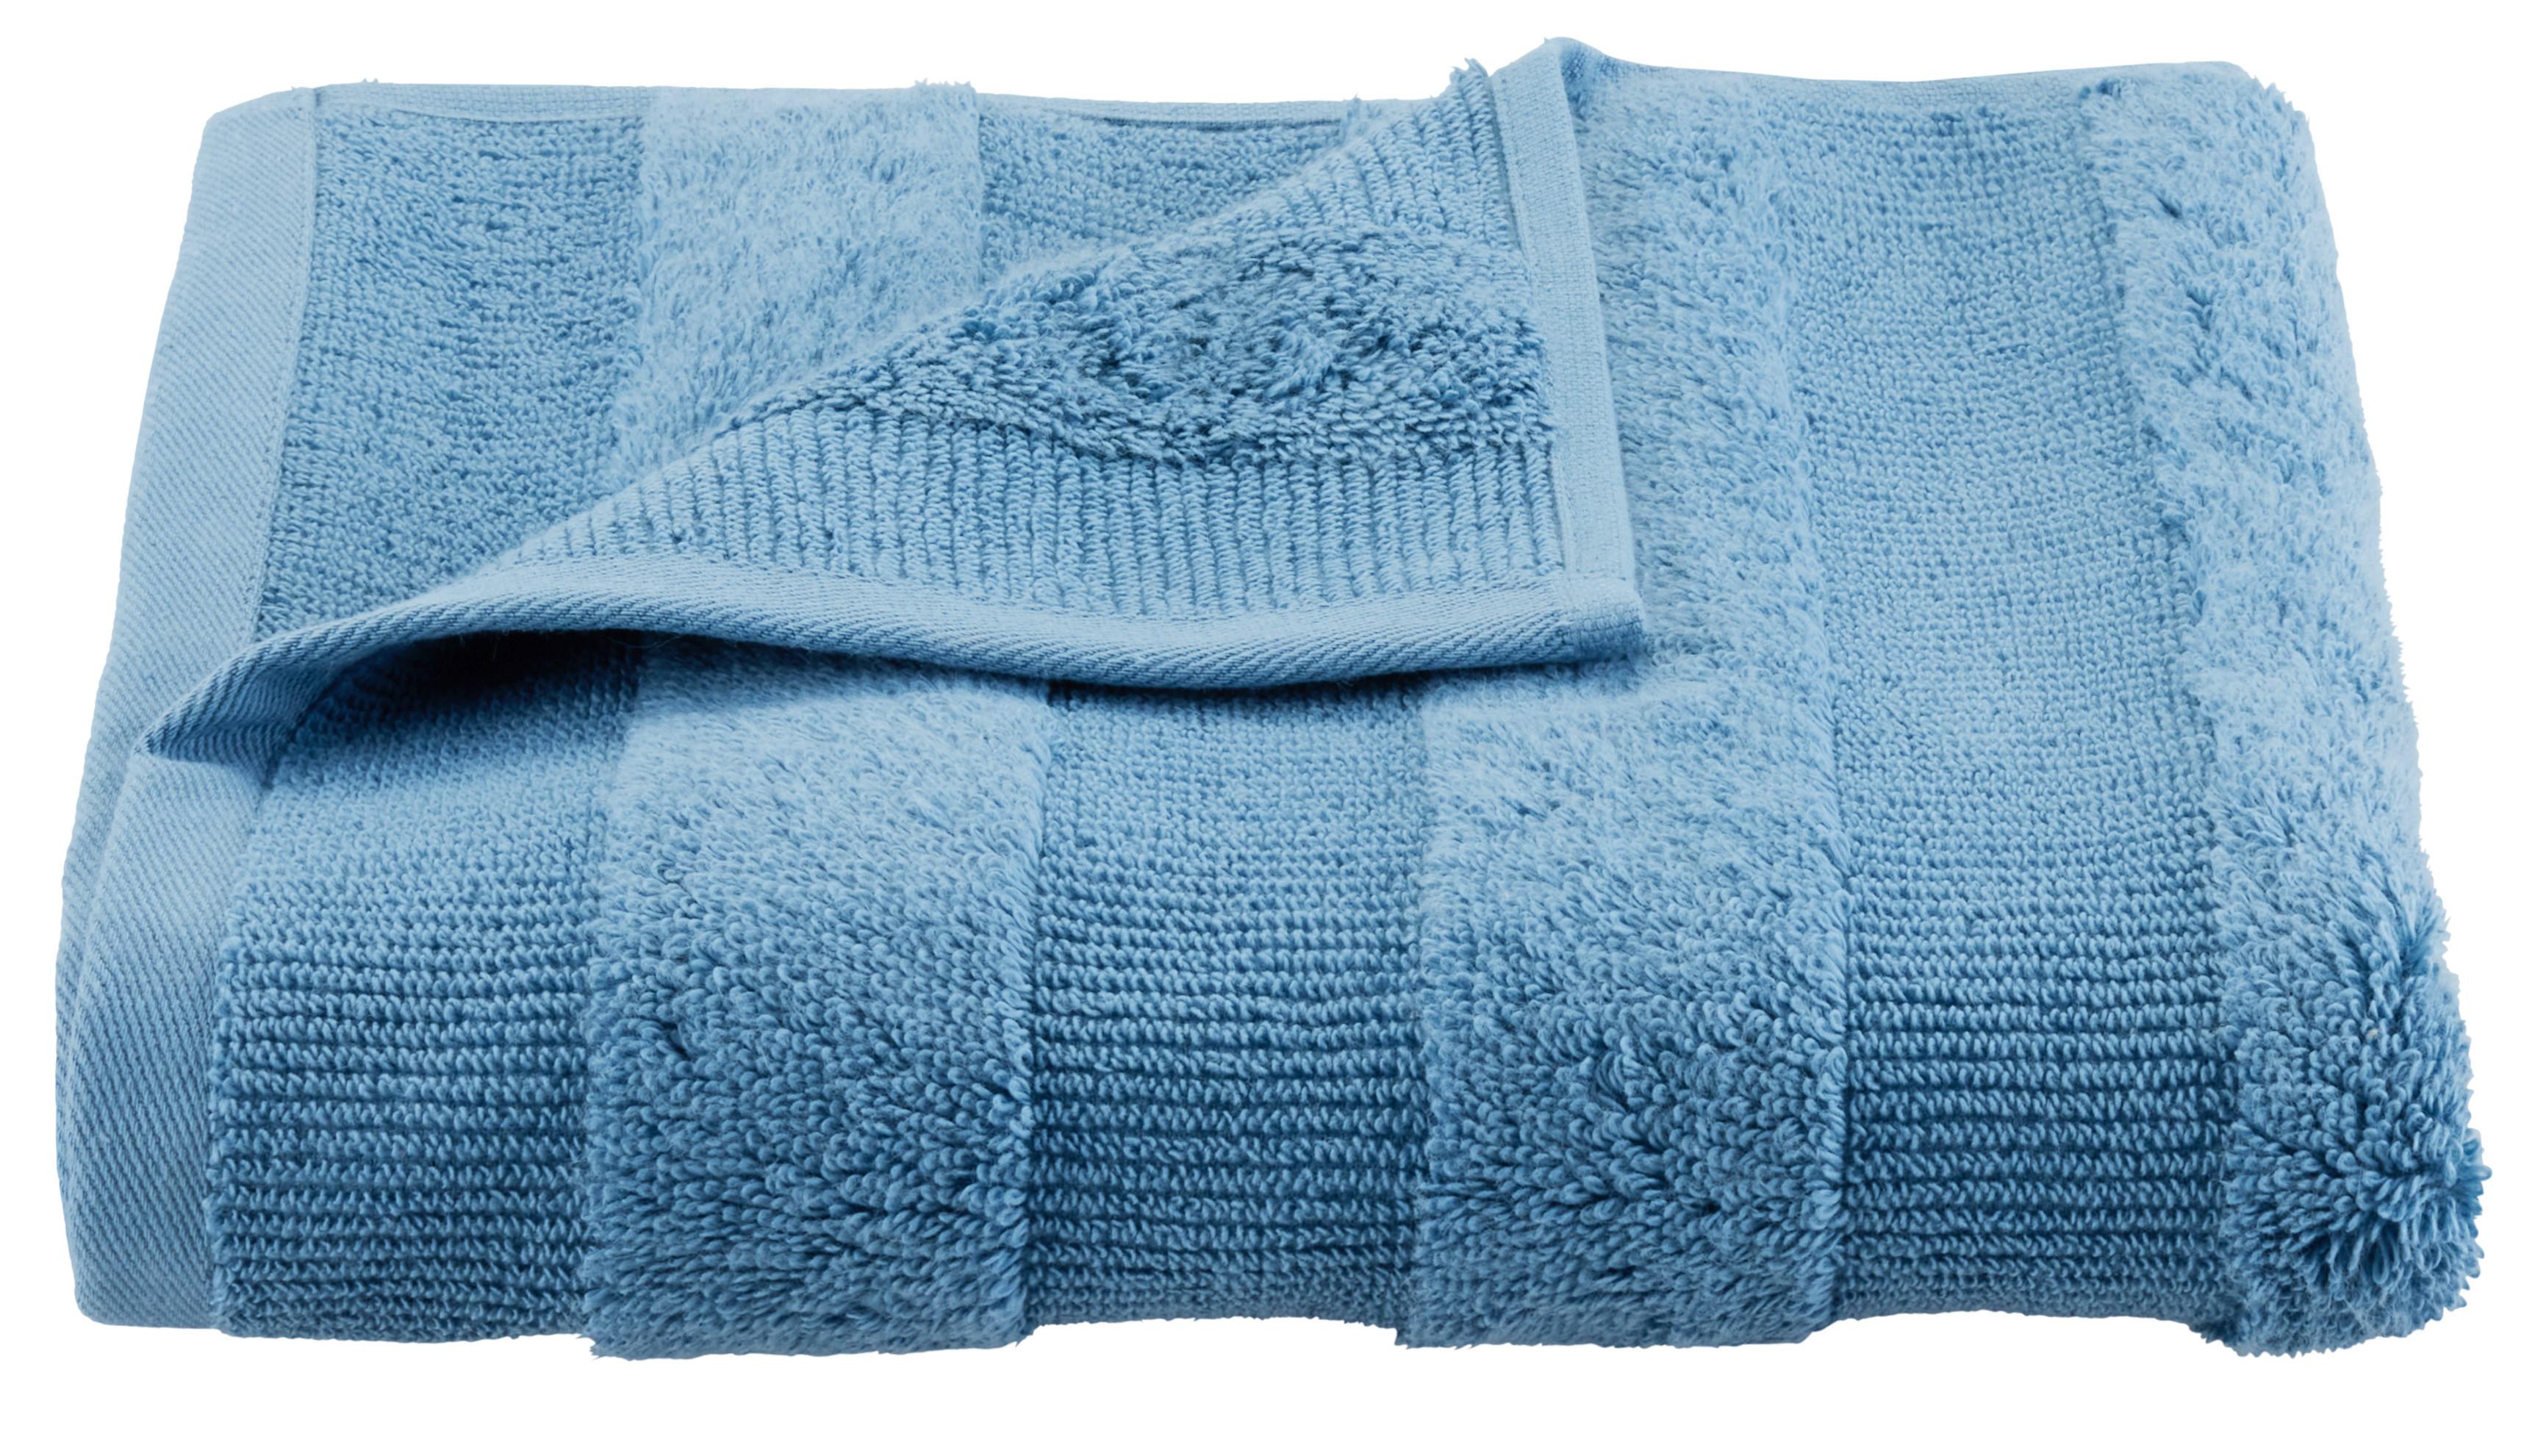 Brisača Chris - modra, tekstil (50/100cm) - Premium Living